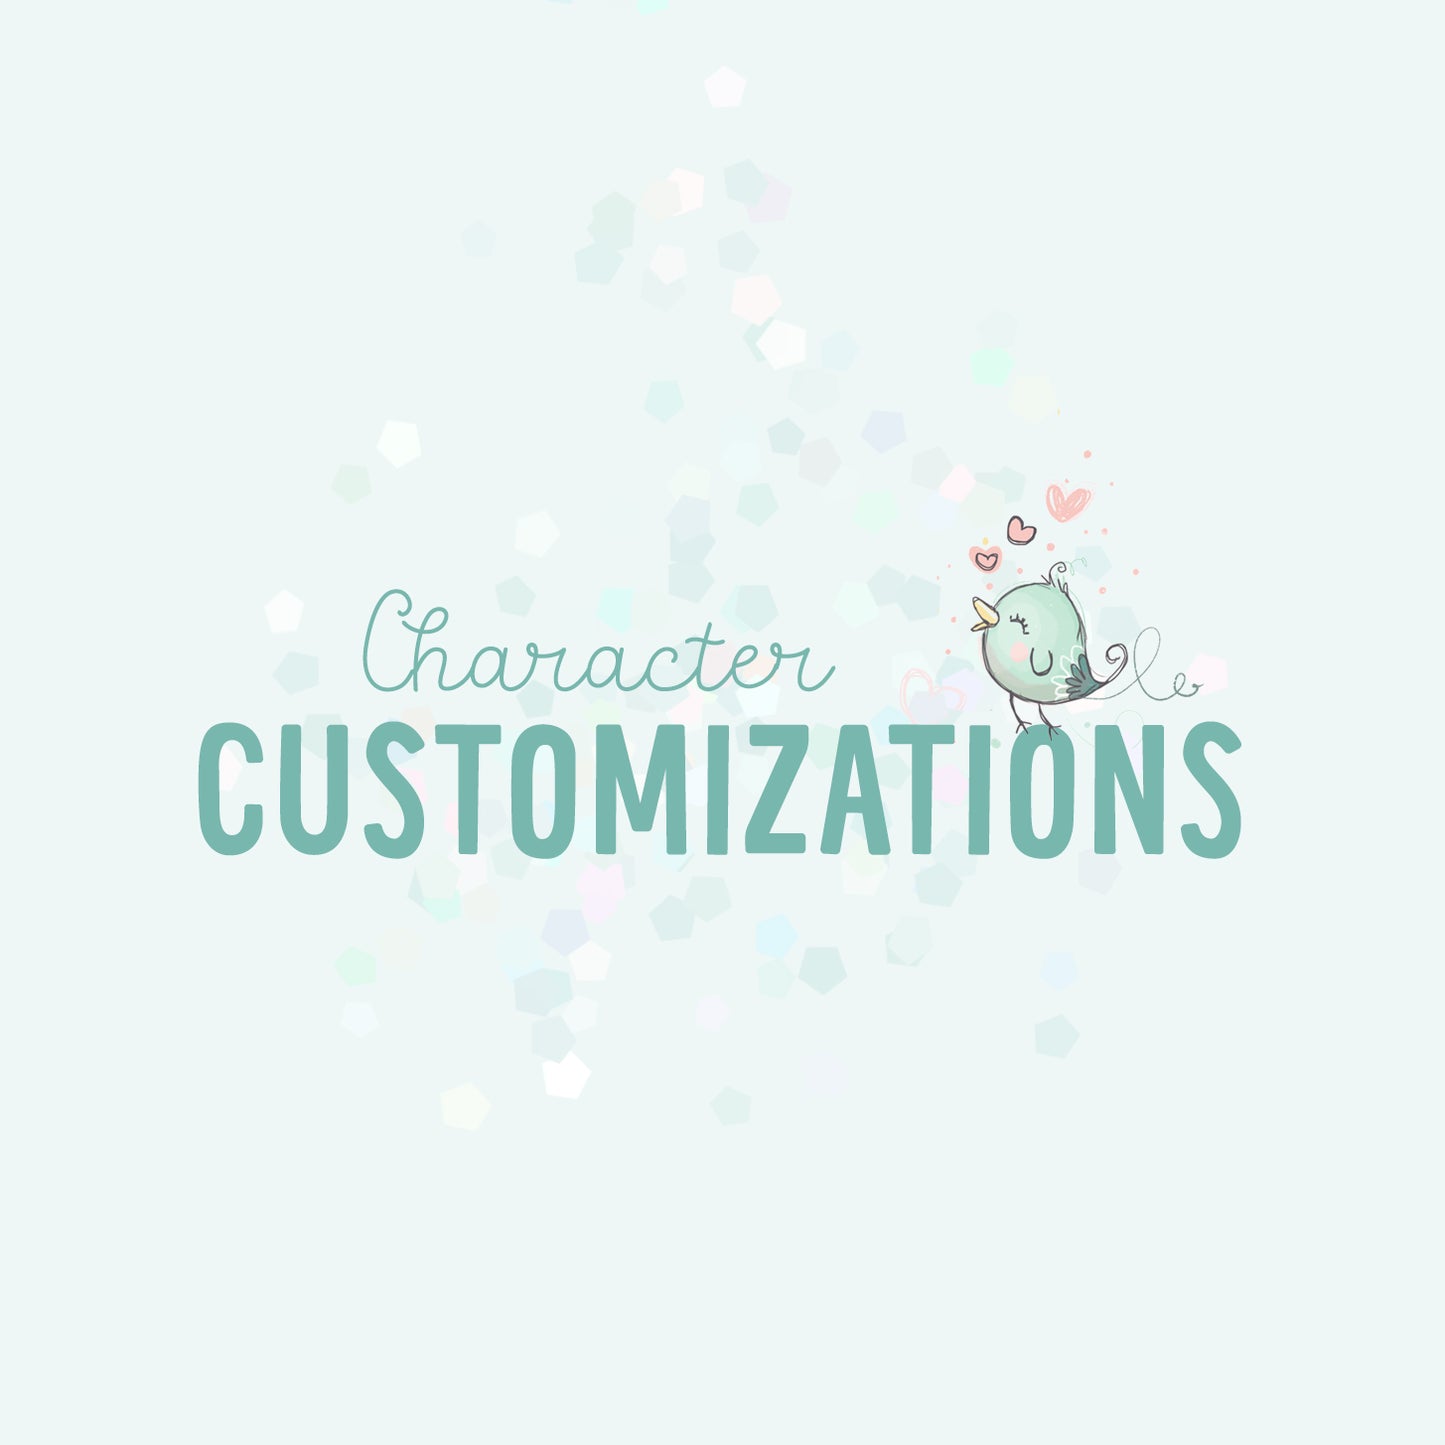 Character Customization